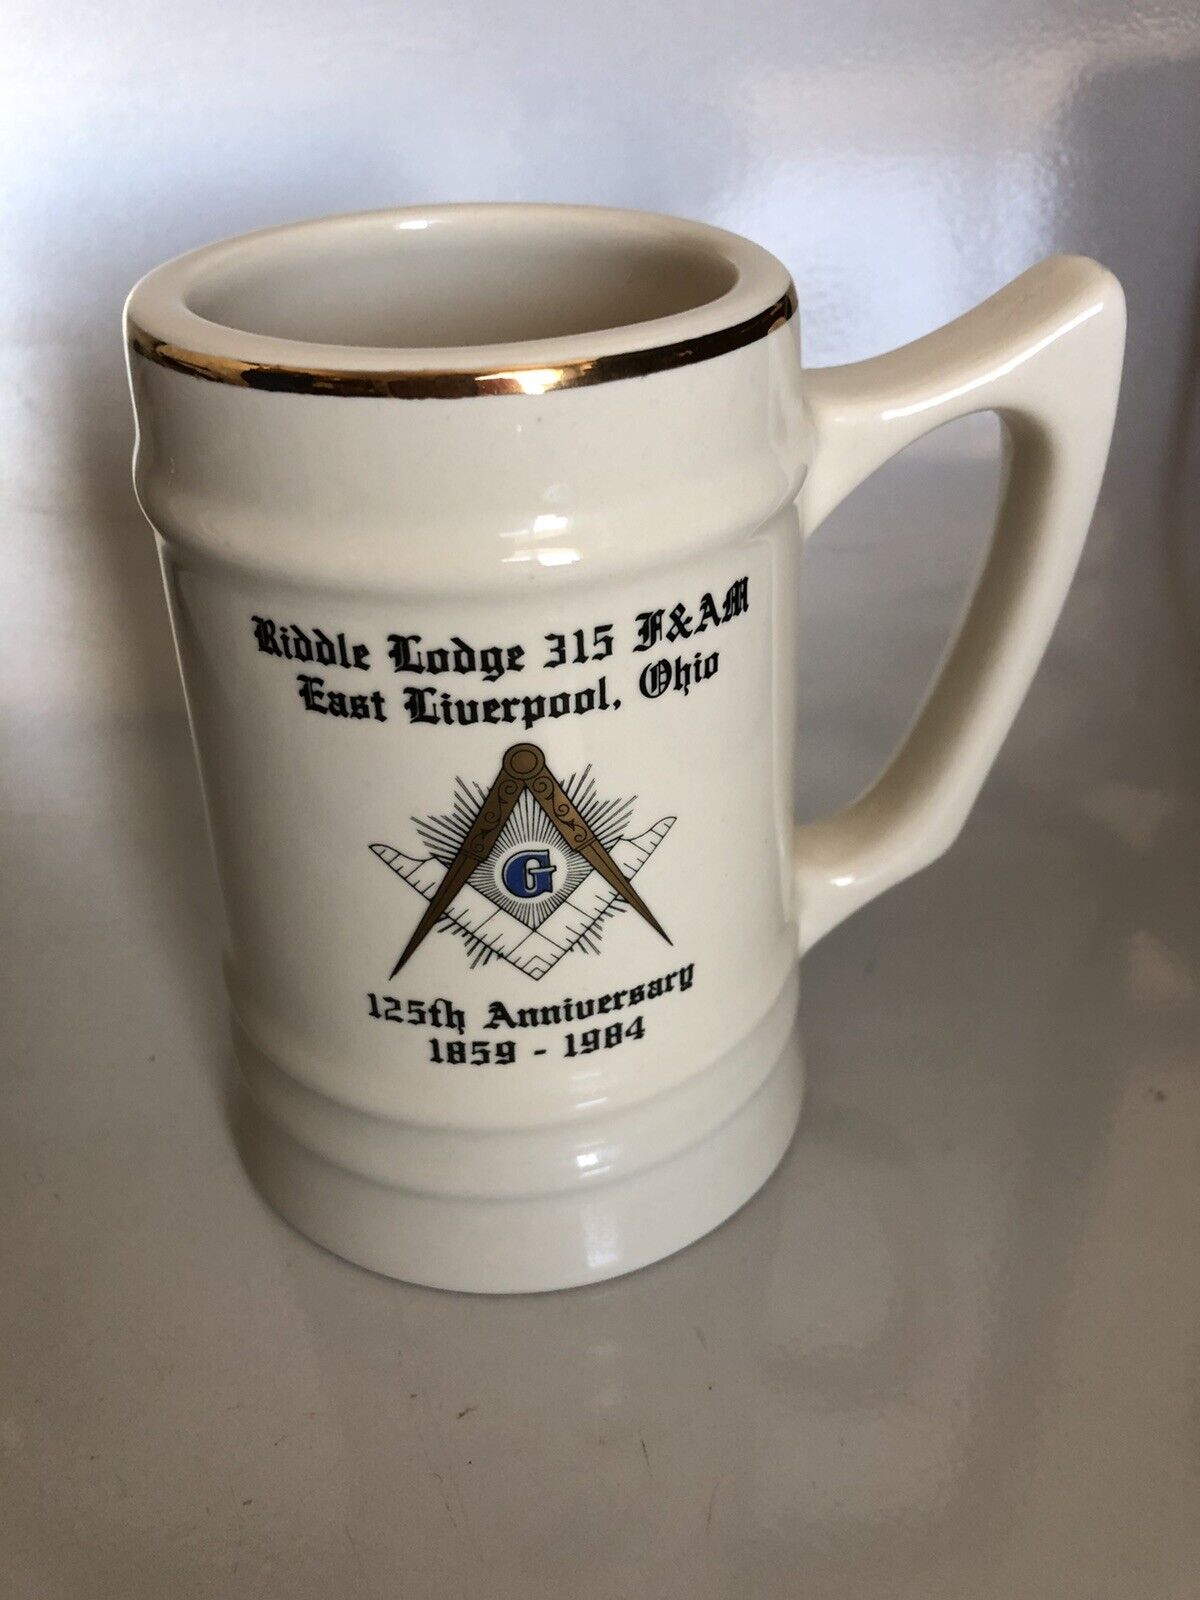 East Liverpool Ohio Riddle Lodge Masons #315 125 Anniversary Stein 1859-1984